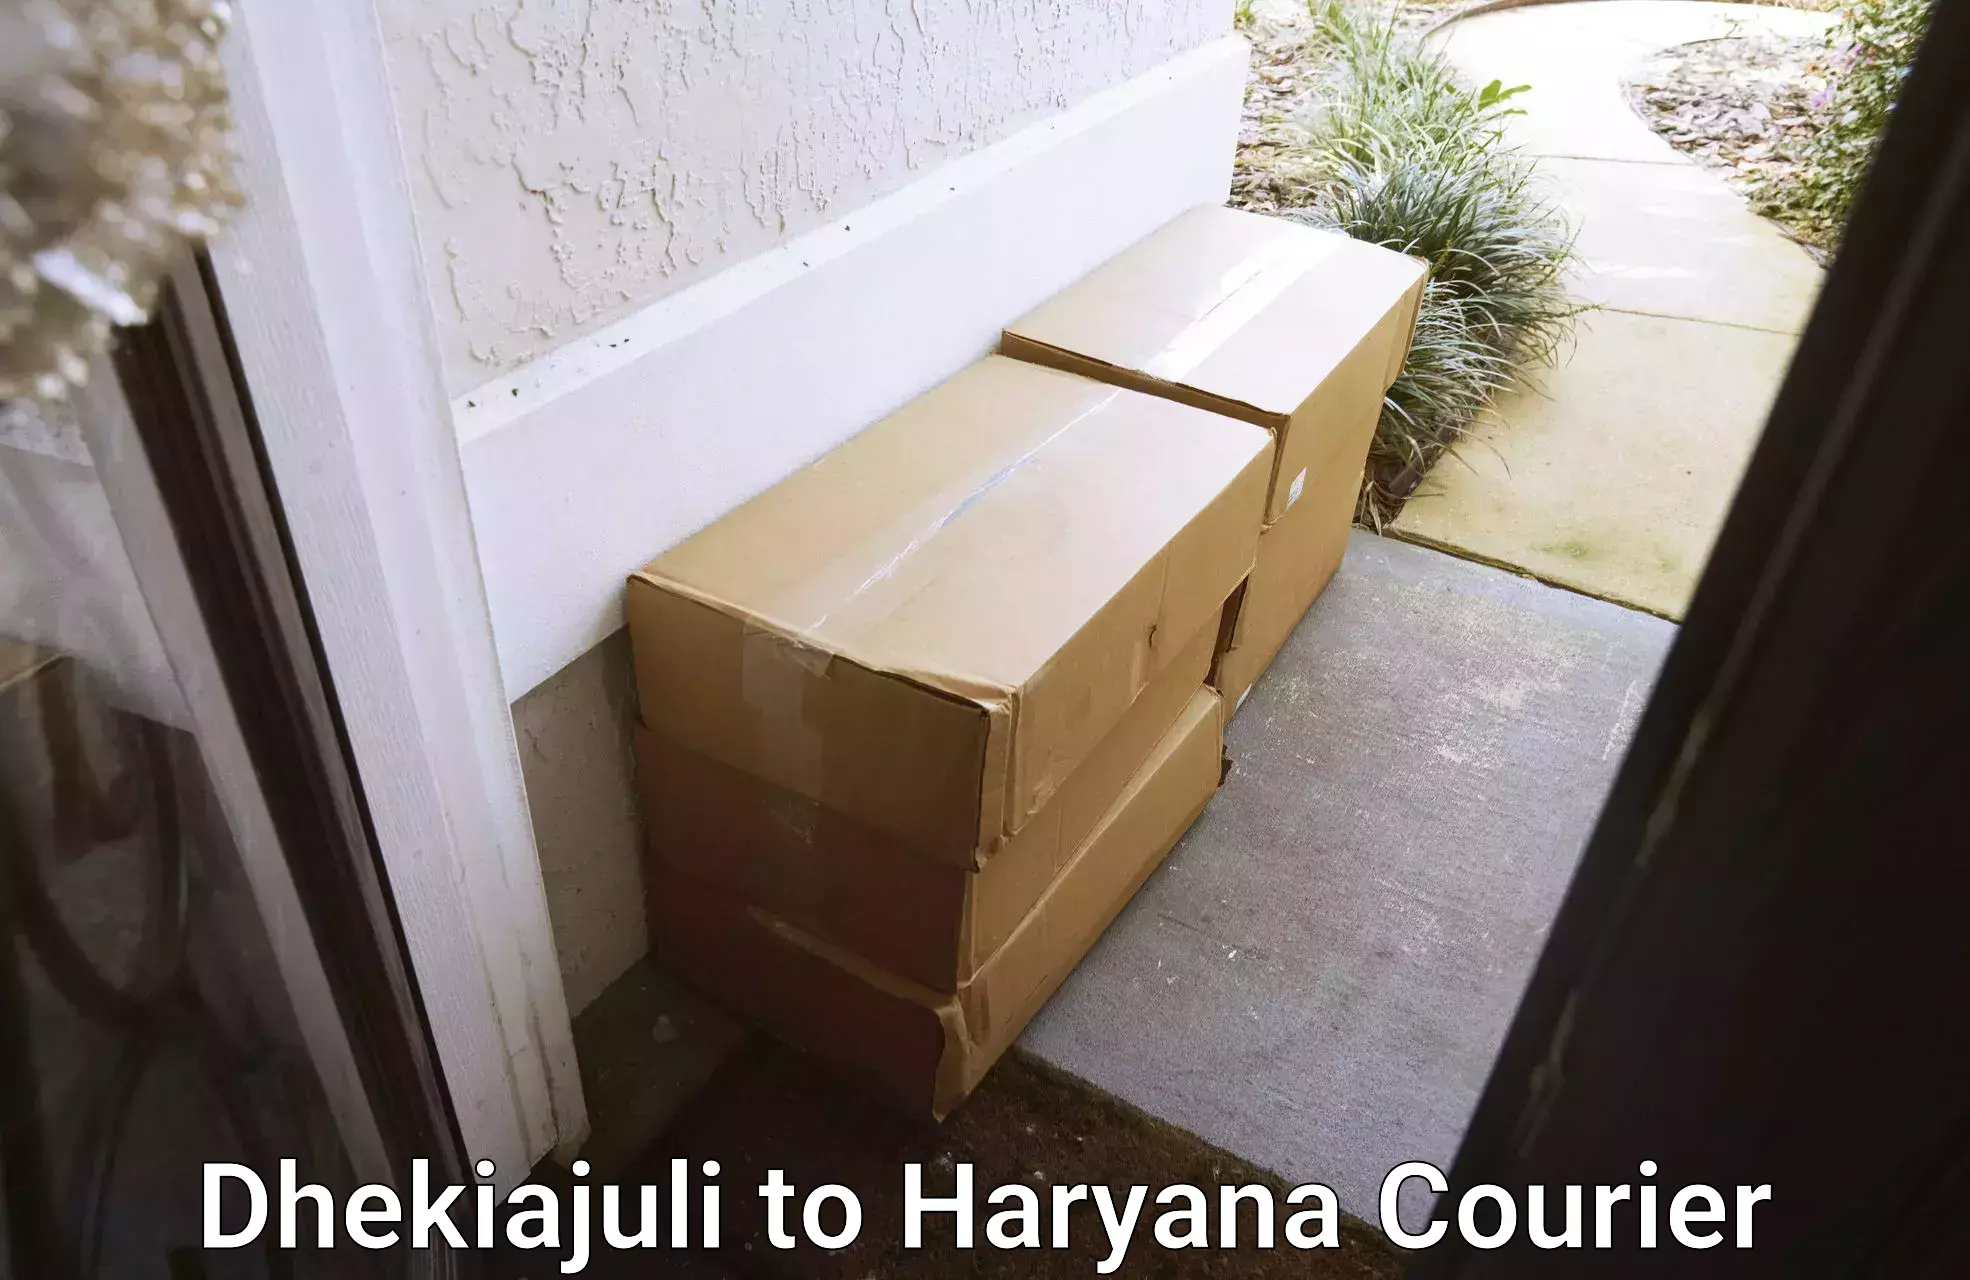 Reliable delivery network Dhekiajuli to Charkhari